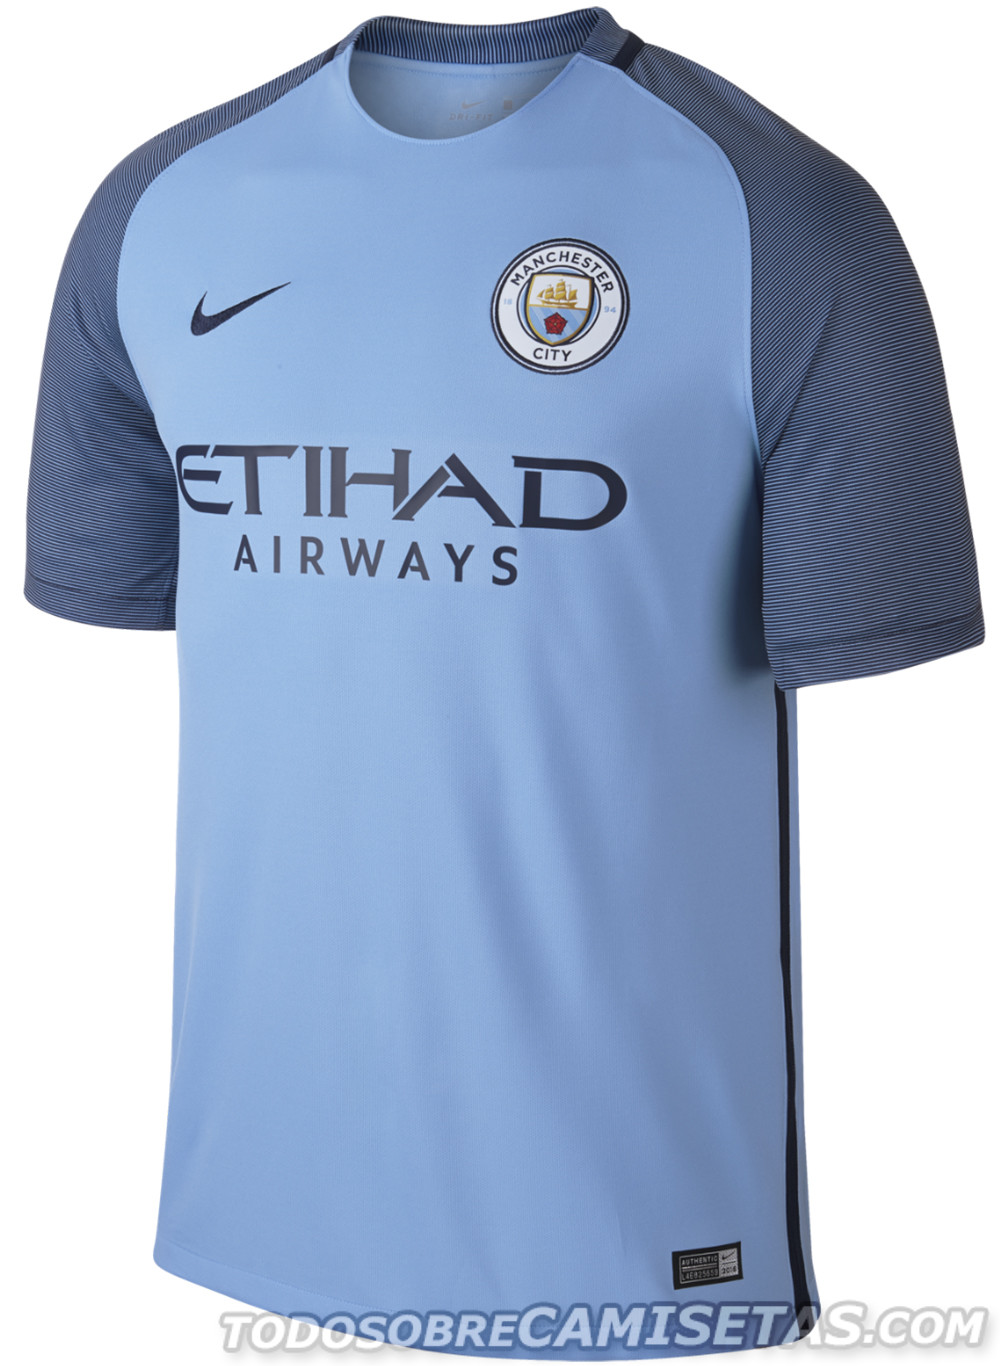 Manchester City 2016-17 Nike Home Kit